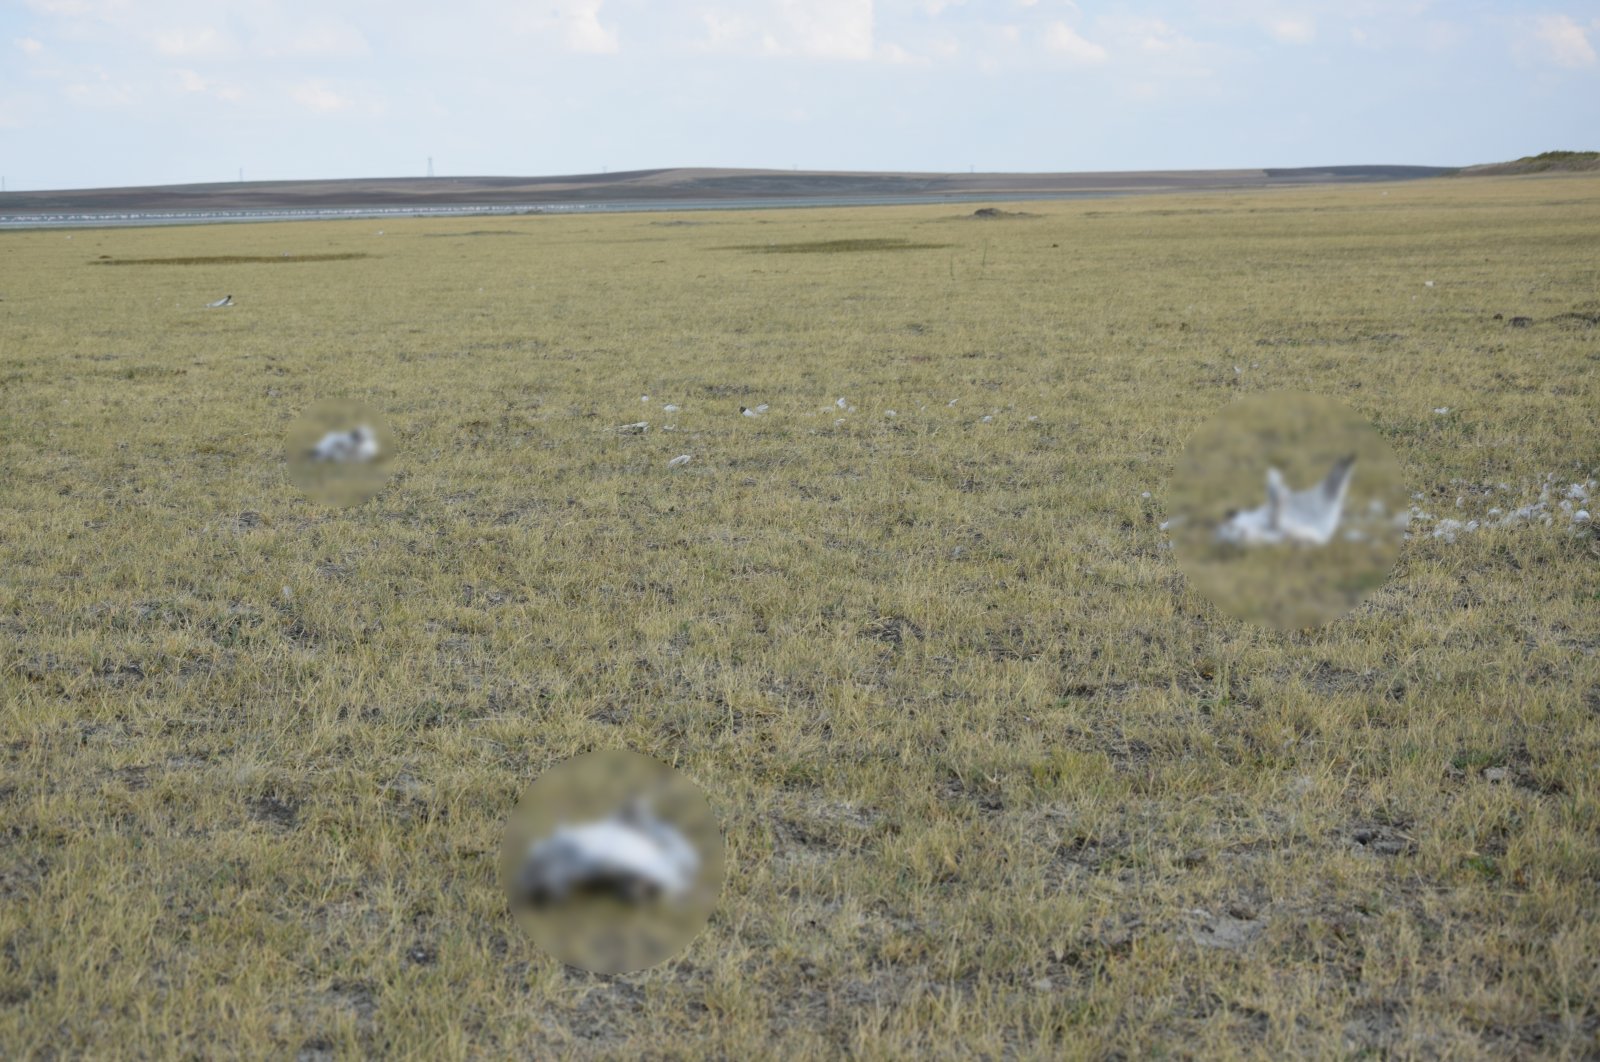 Kematian massal burung camar di danau Turki memicu penyelidikan